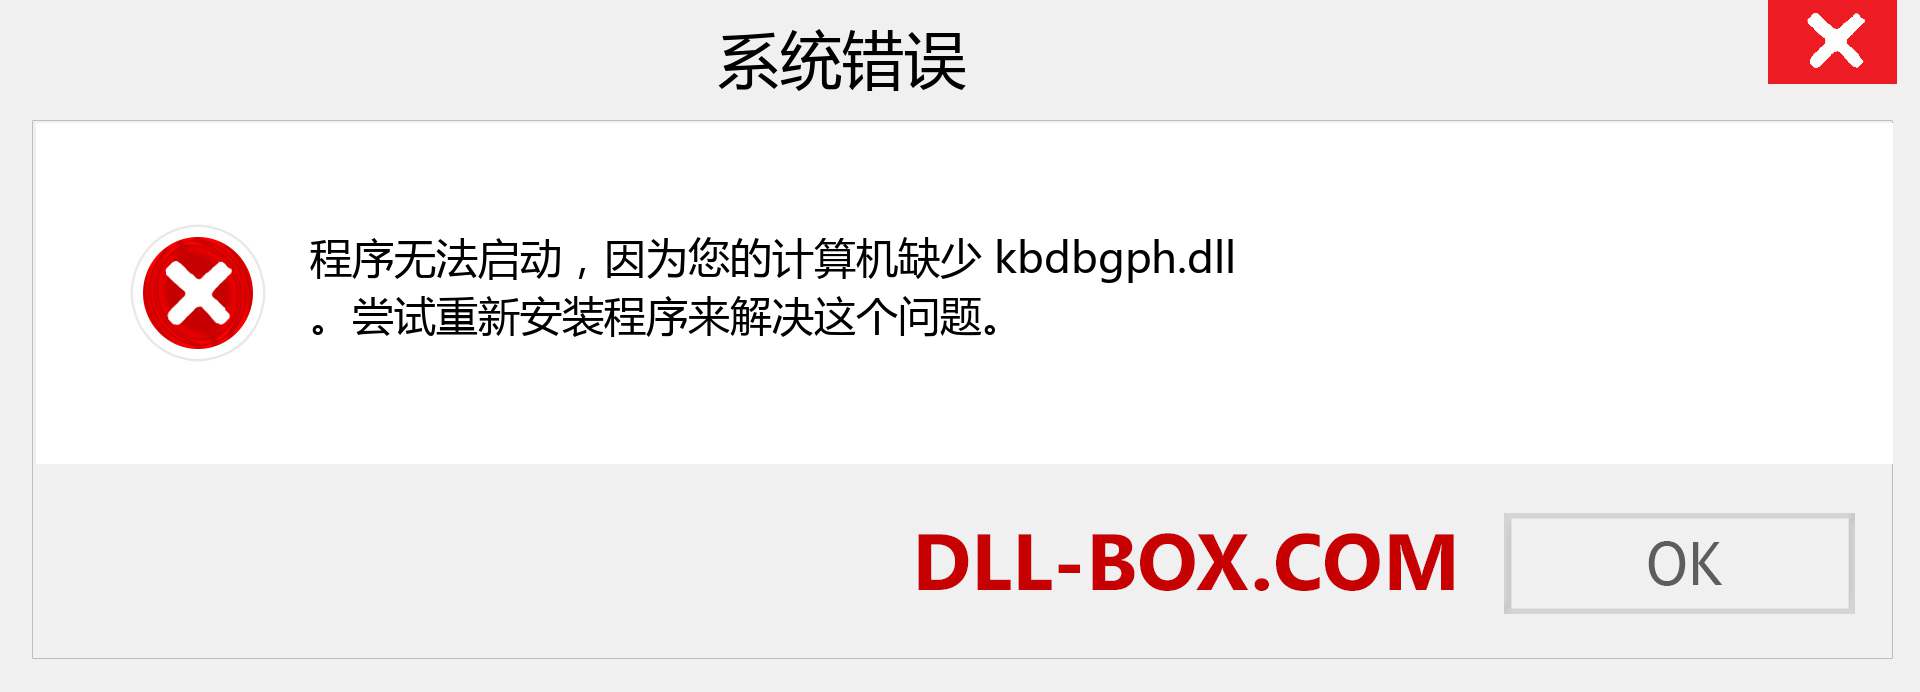 kbdbgph.dll 文件丢失？。 适用于 Windows 7、8、10 的下载 - 修复 Windows、照片、图像上的 kbdbgph dll 丢失错误